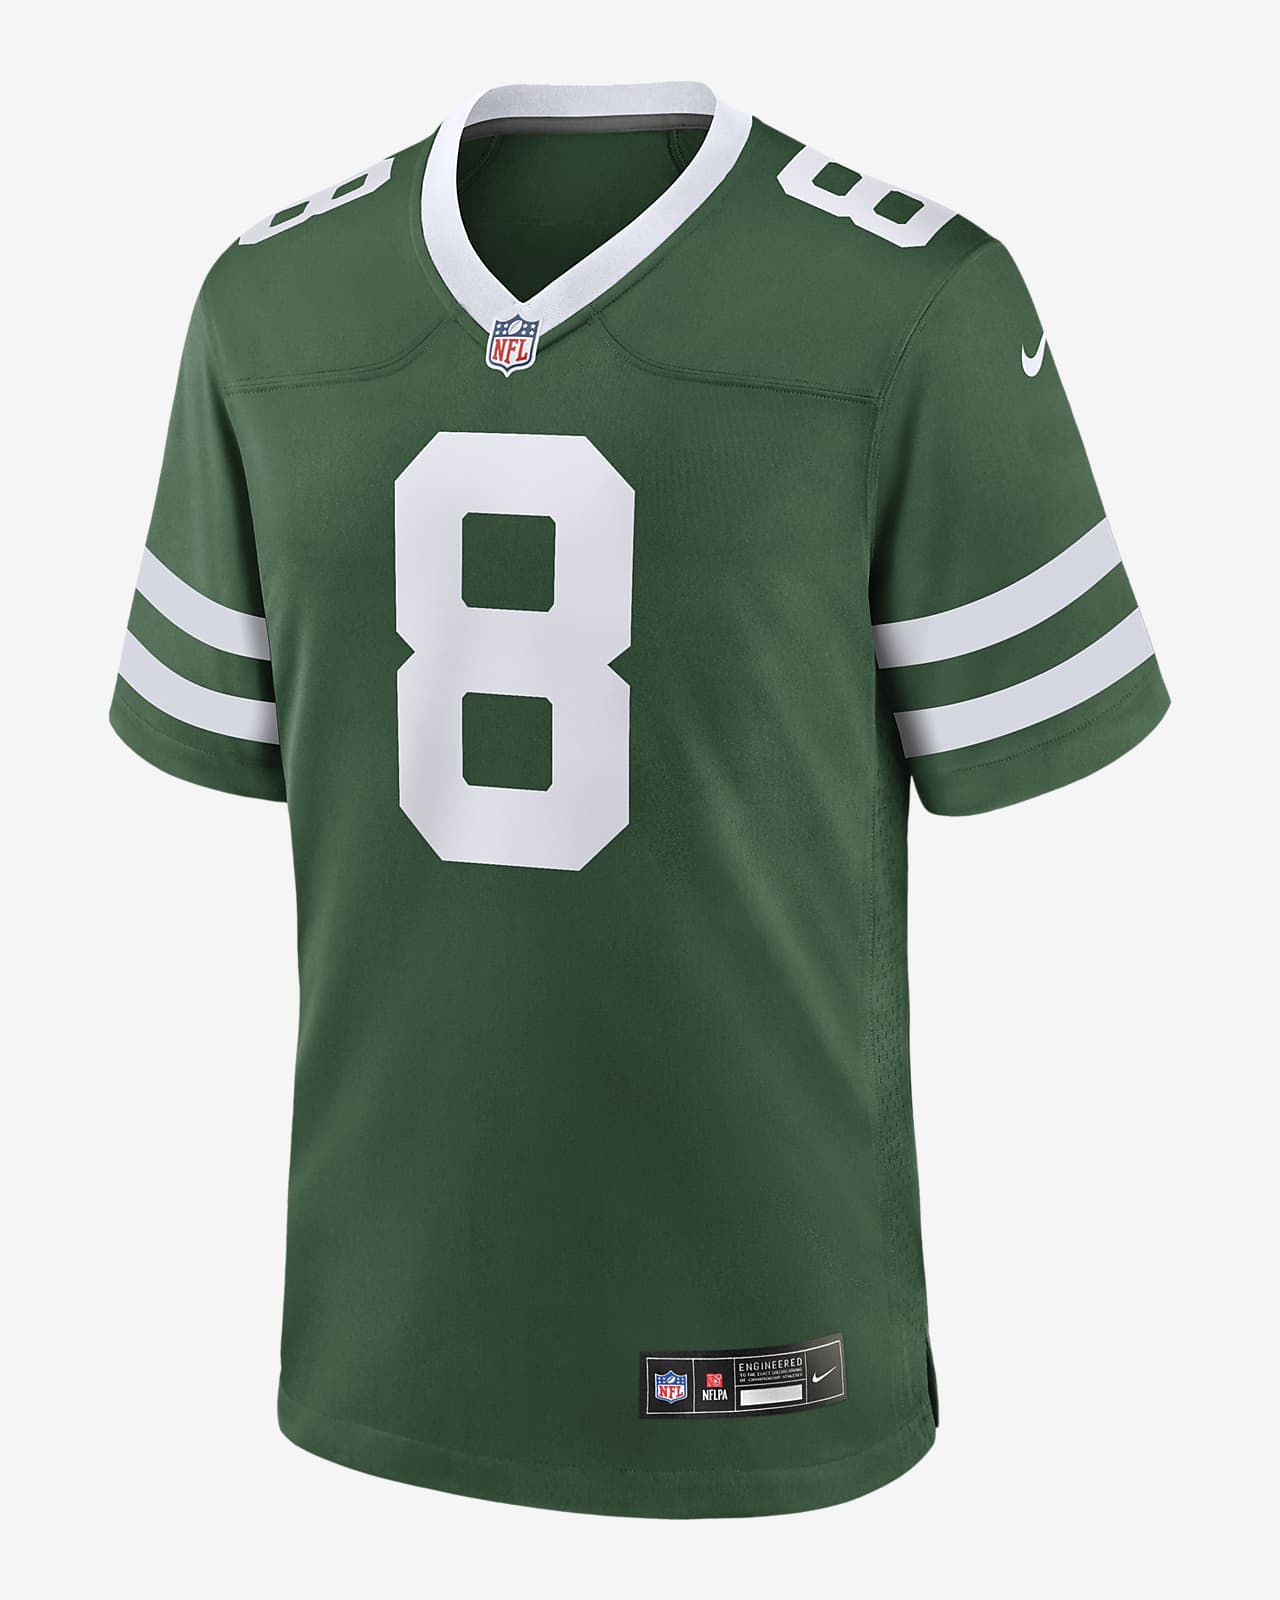 Jersey de fútbol americano Nike de la NFL Game para hombre Aaron Rodgers New York Jets